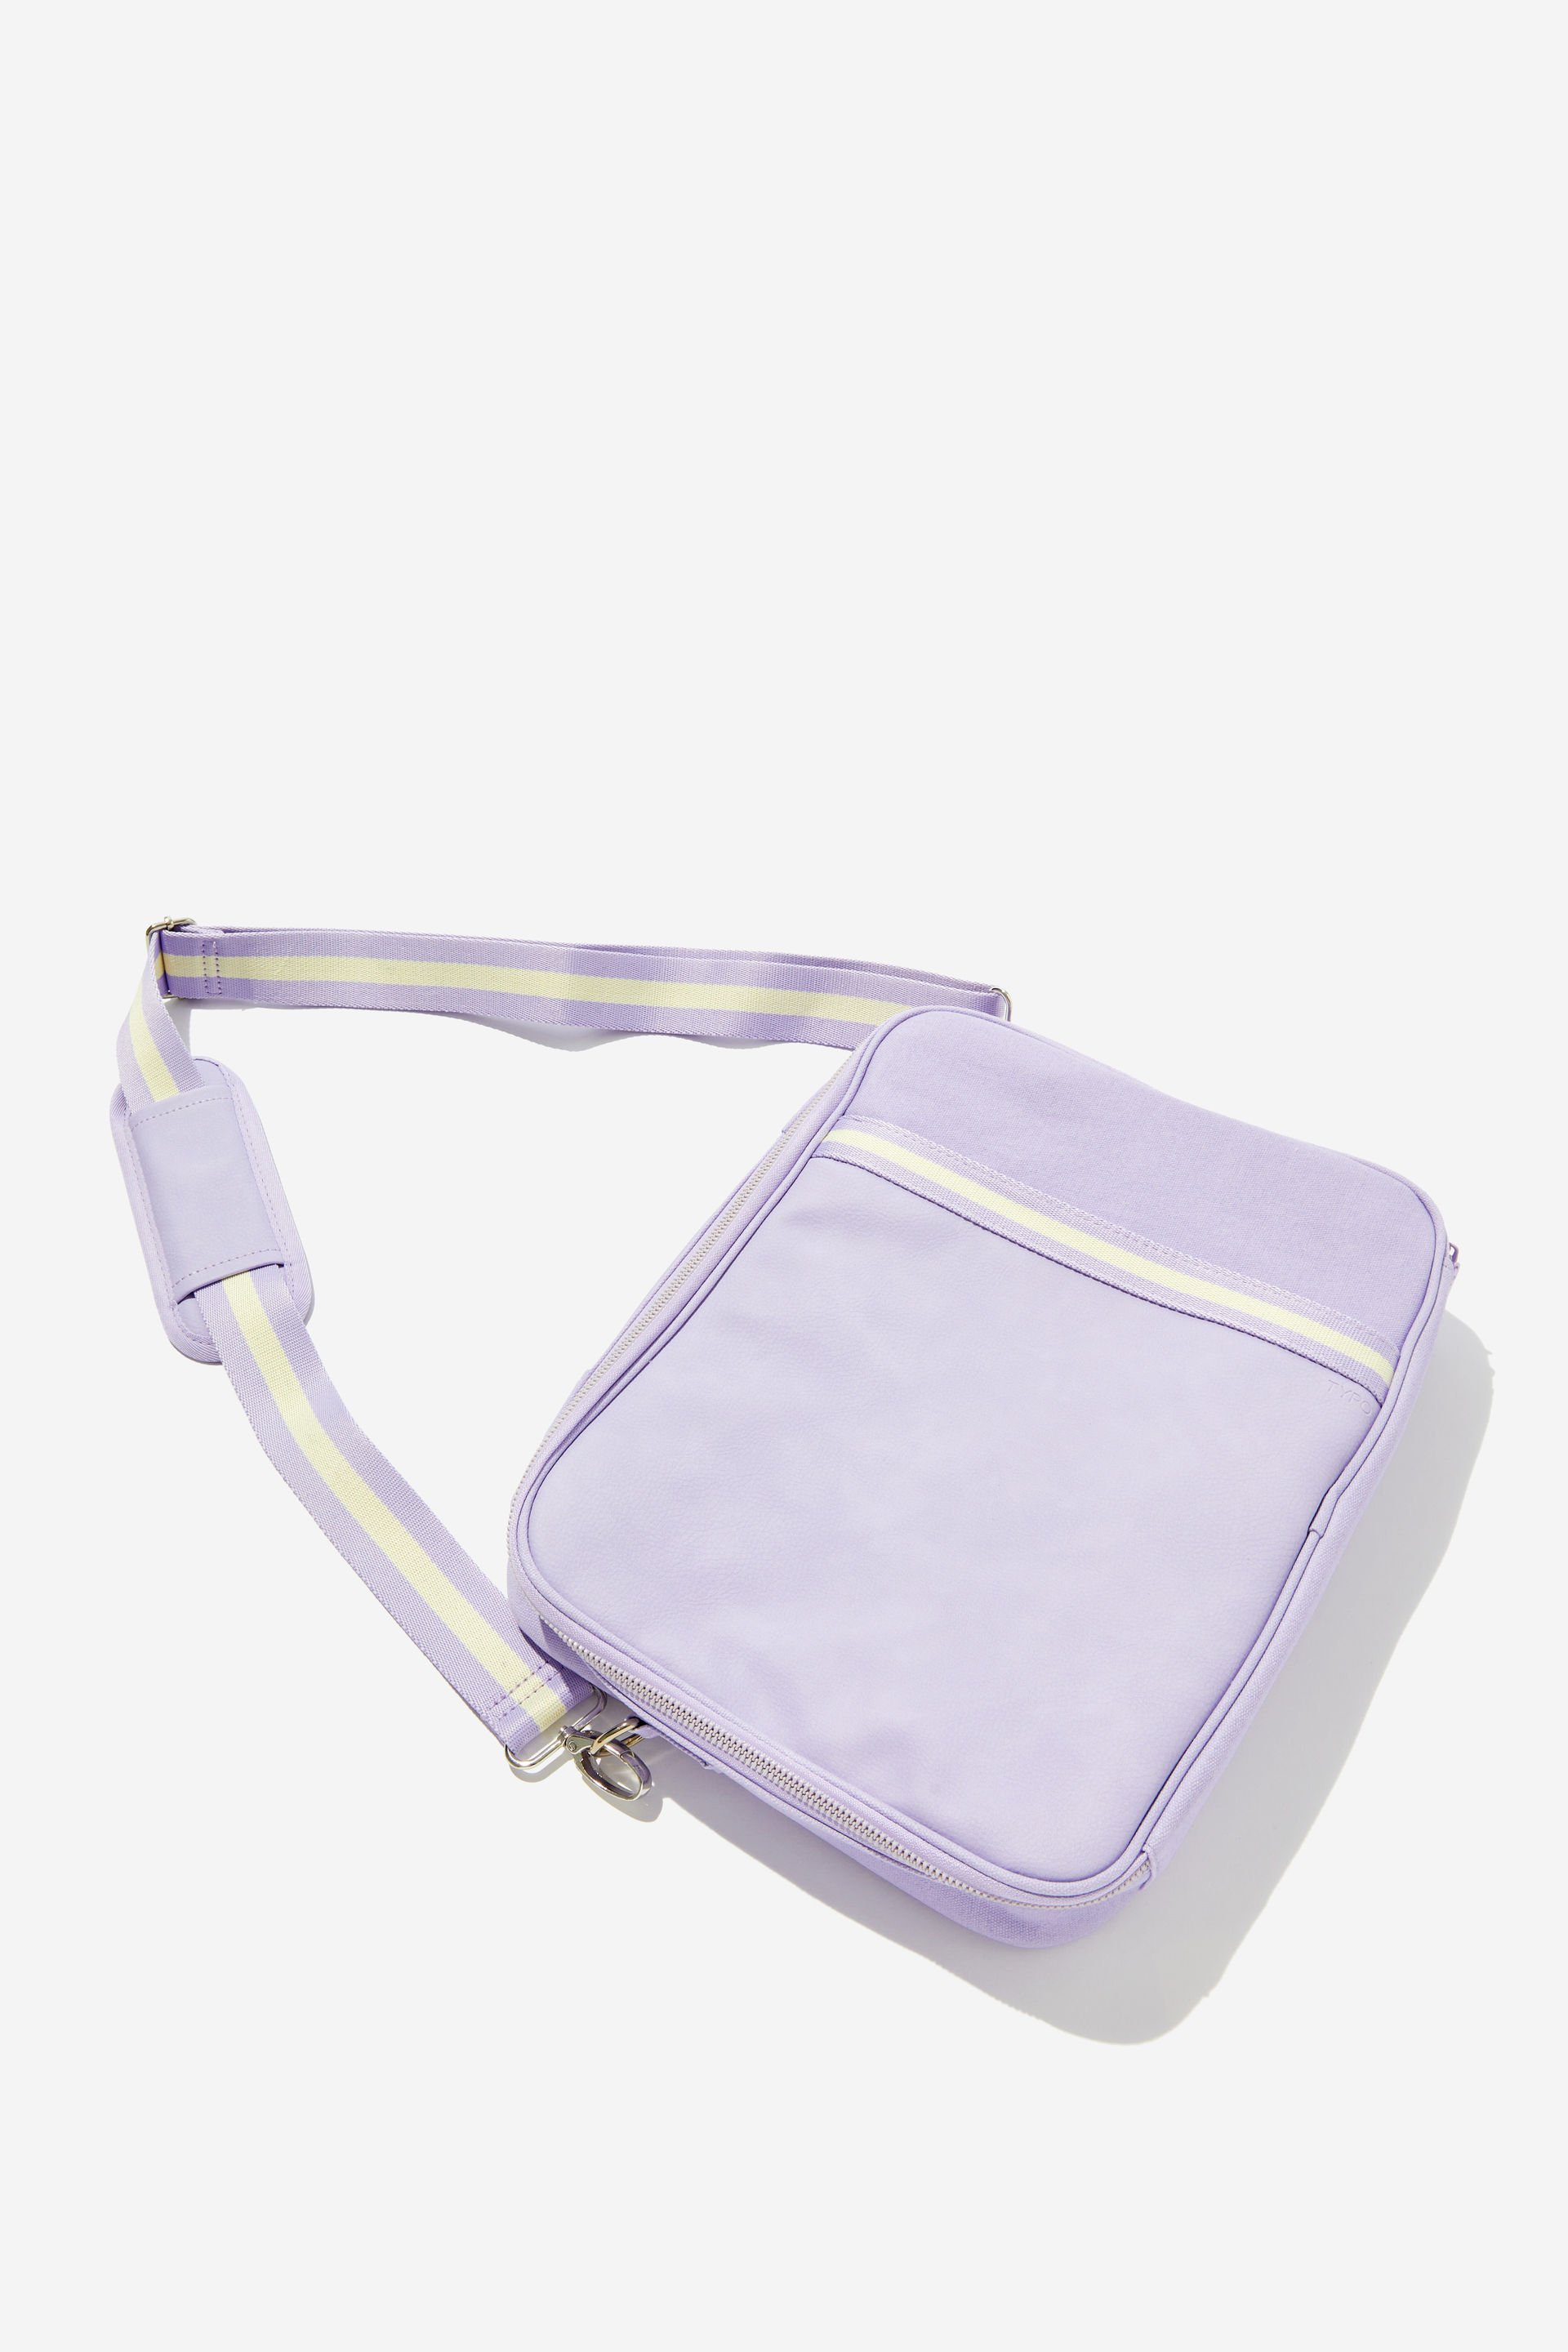 Typo - Essential 13 Mobile Desk - Soft lilac